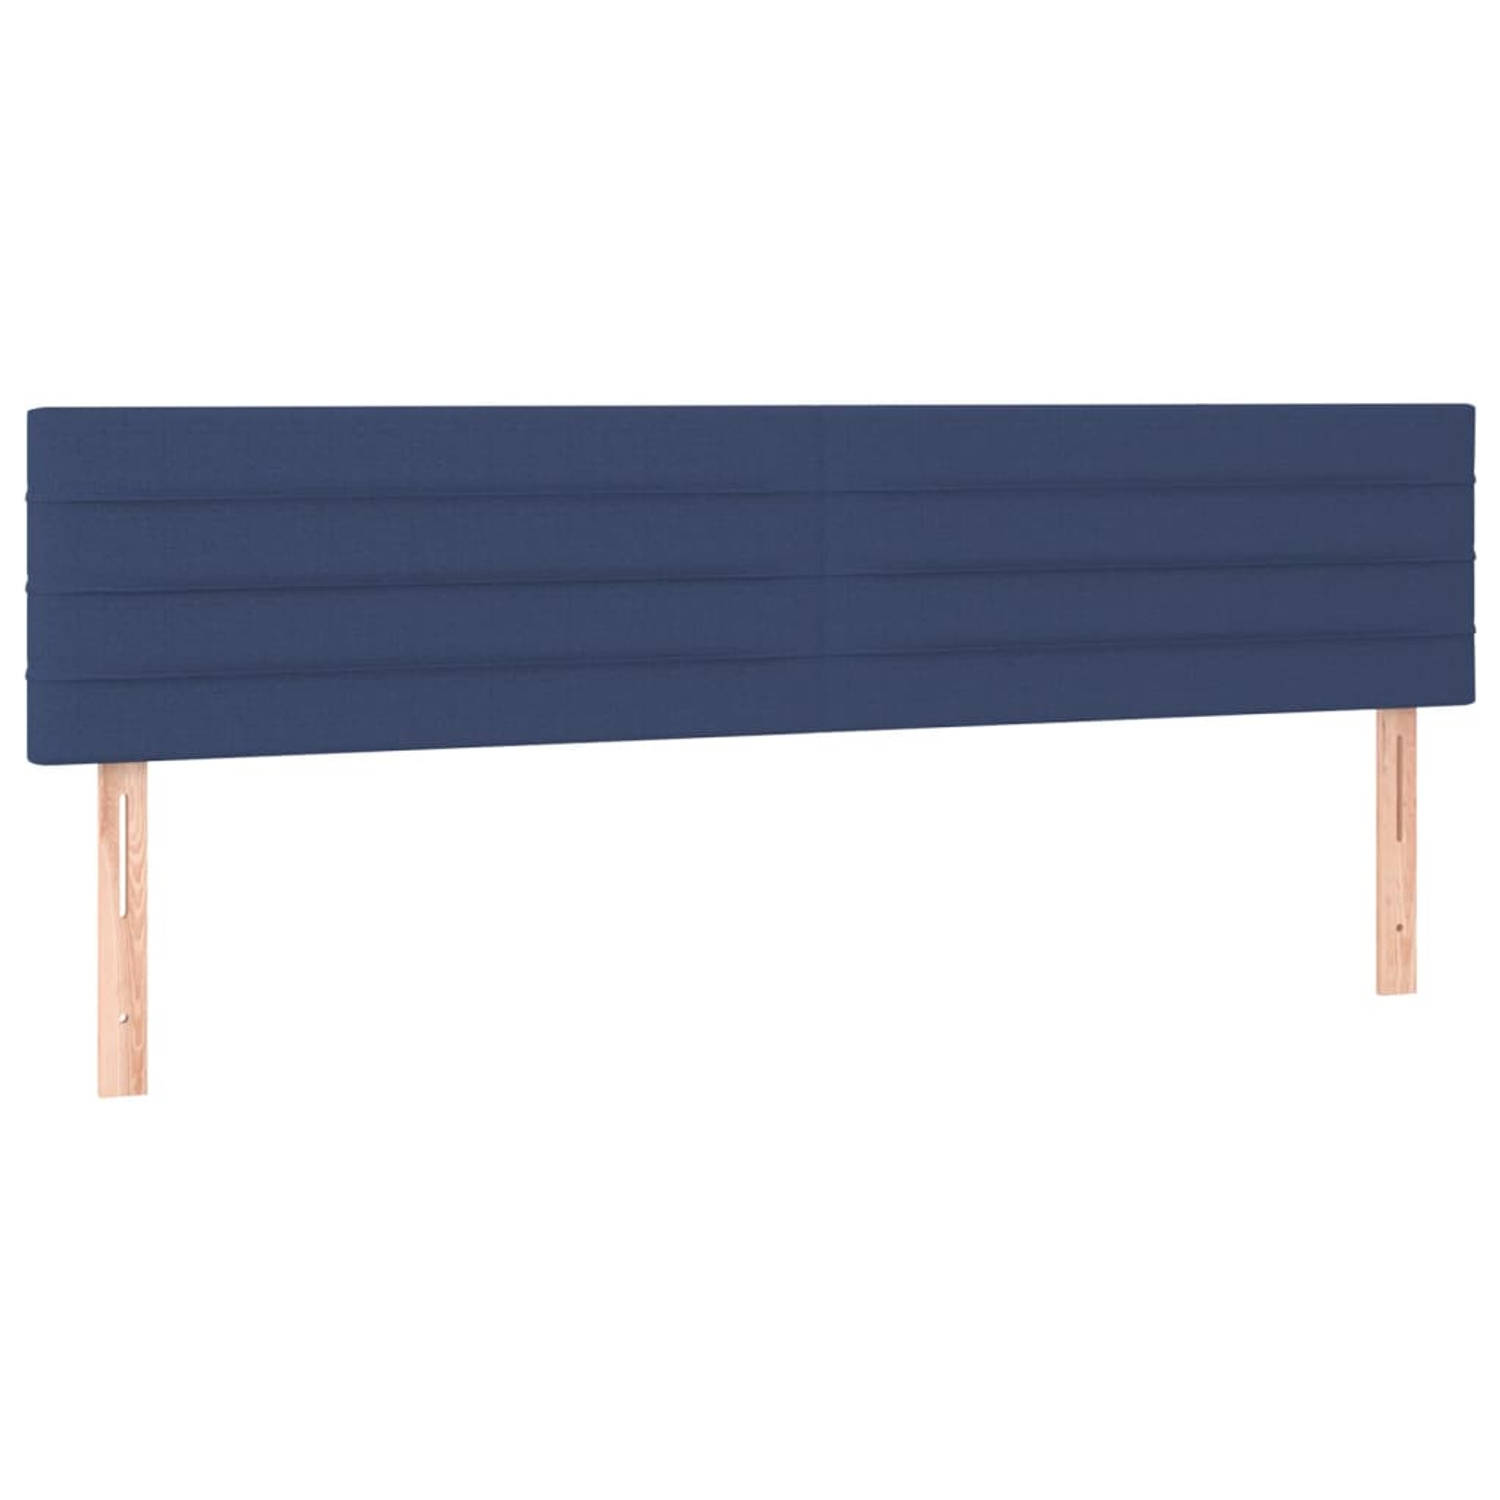 The Living Store Hoofdbord Blauw - 200 x 5 cm - Duurzaam materiaal - Verstelbare hoogte - Comfortabele ondersteuning